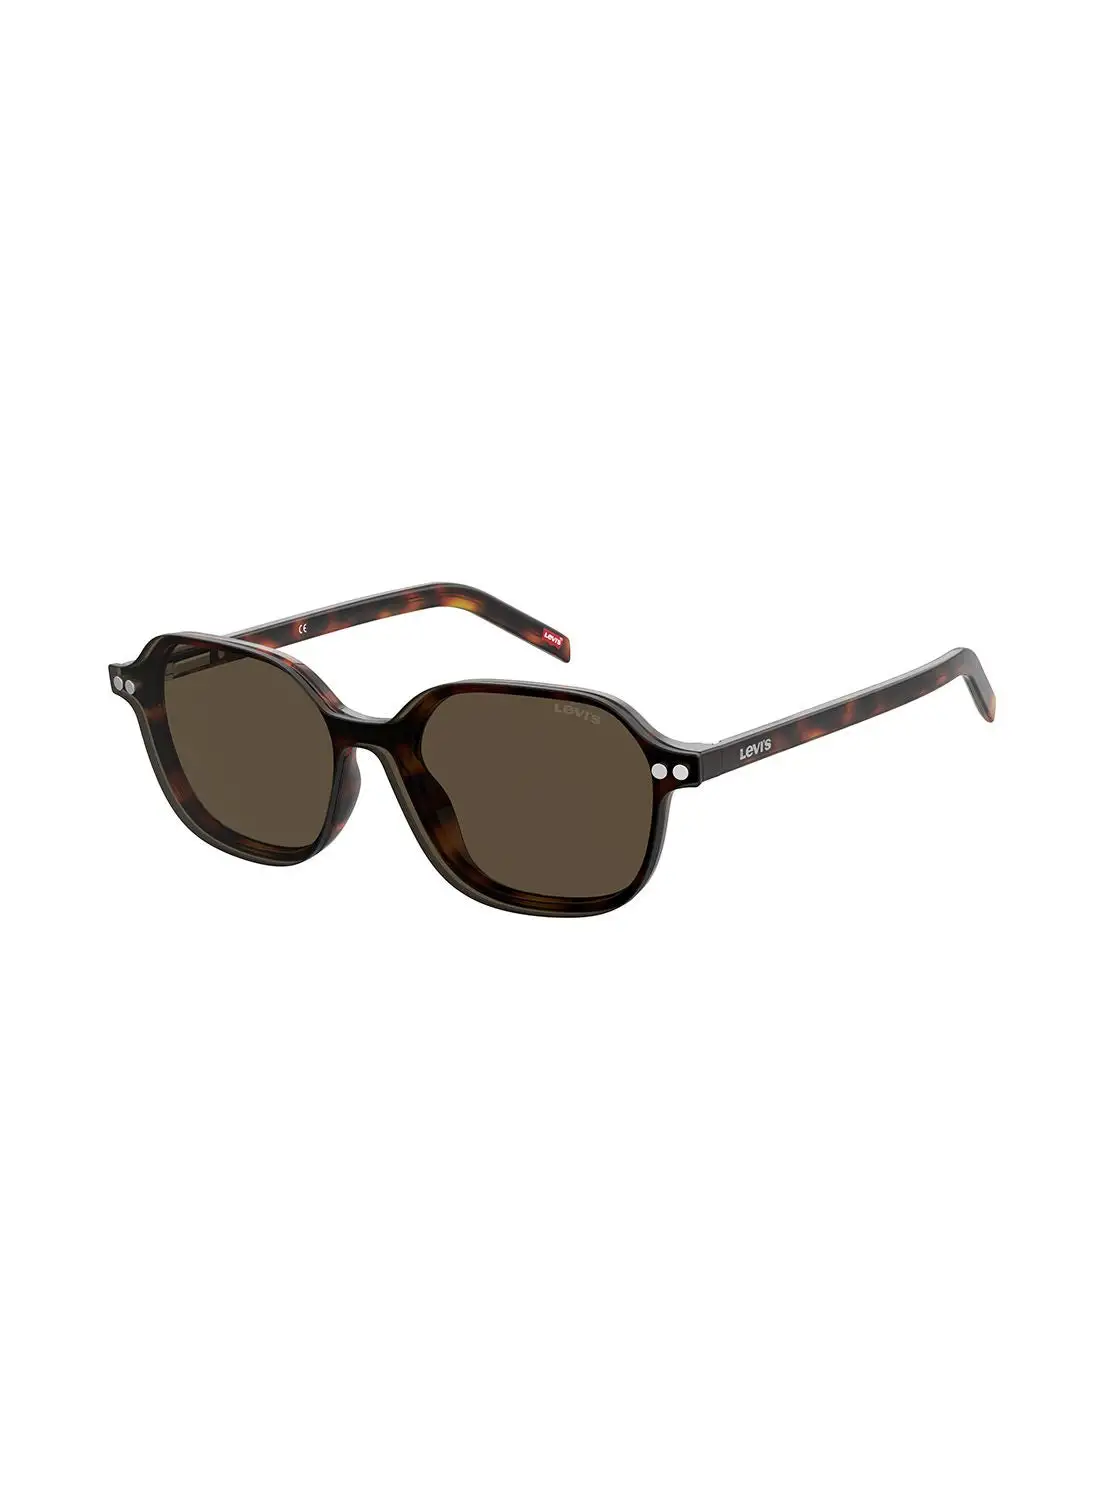 Levi's Unisex UV Protection Semi-Oval Sunglasses - Lv 1024/Cs Hvn 52 - Lens Size: 52 Mm